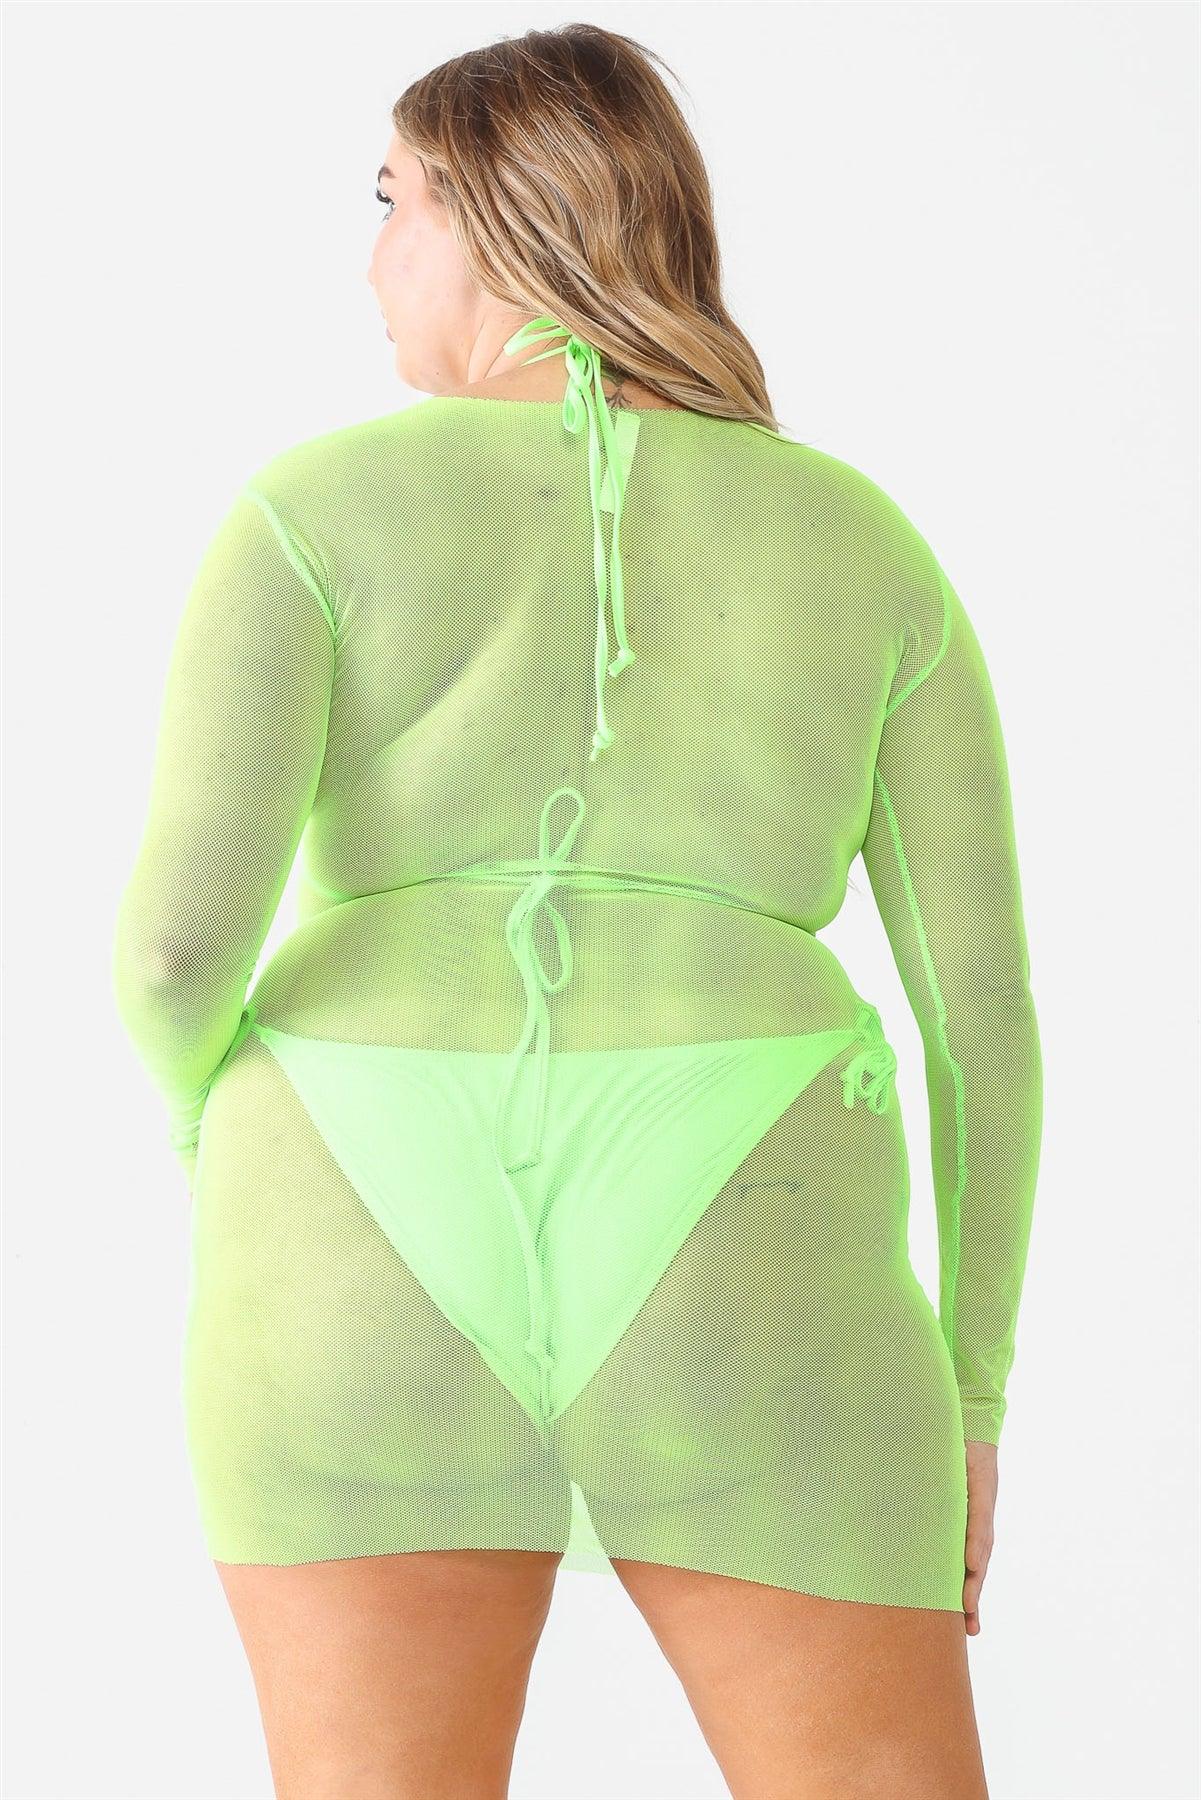 Neon Green Triangle Top & Self-Tie Bottom Bikini & Long Sleeve Mesh Cover-Up Mini Dress 3 Piece Set Swimwear